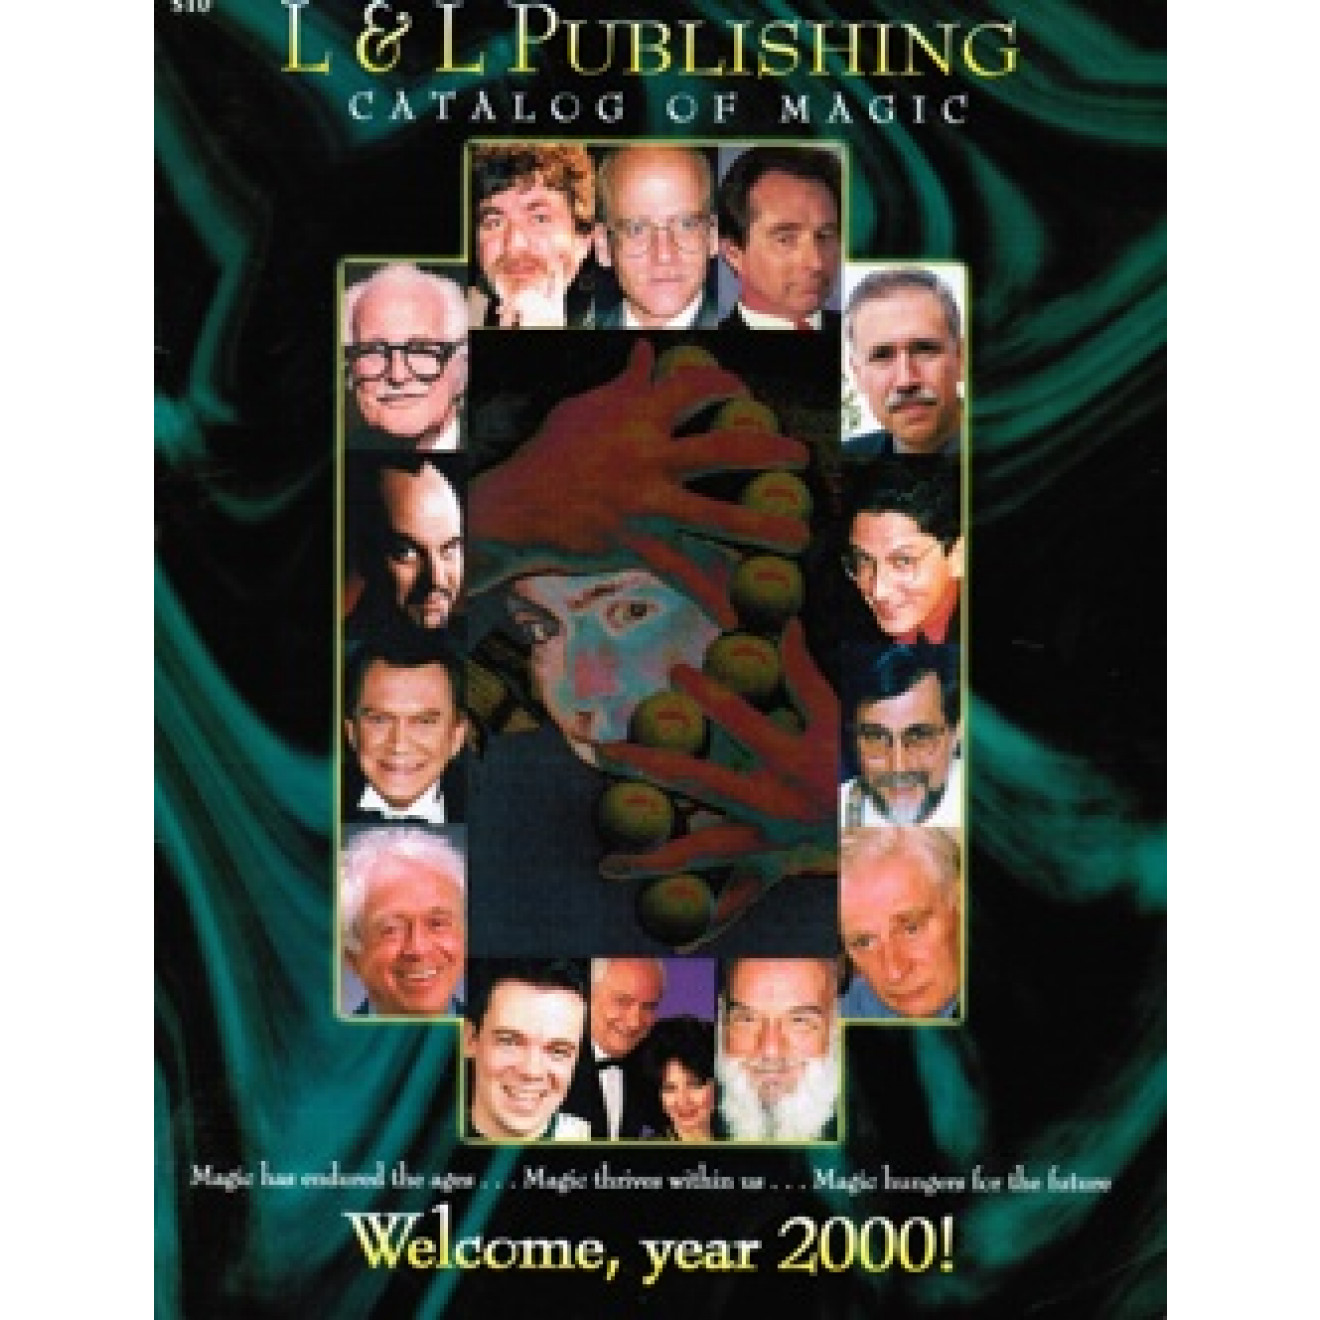 L&L Publishing catalog of magic